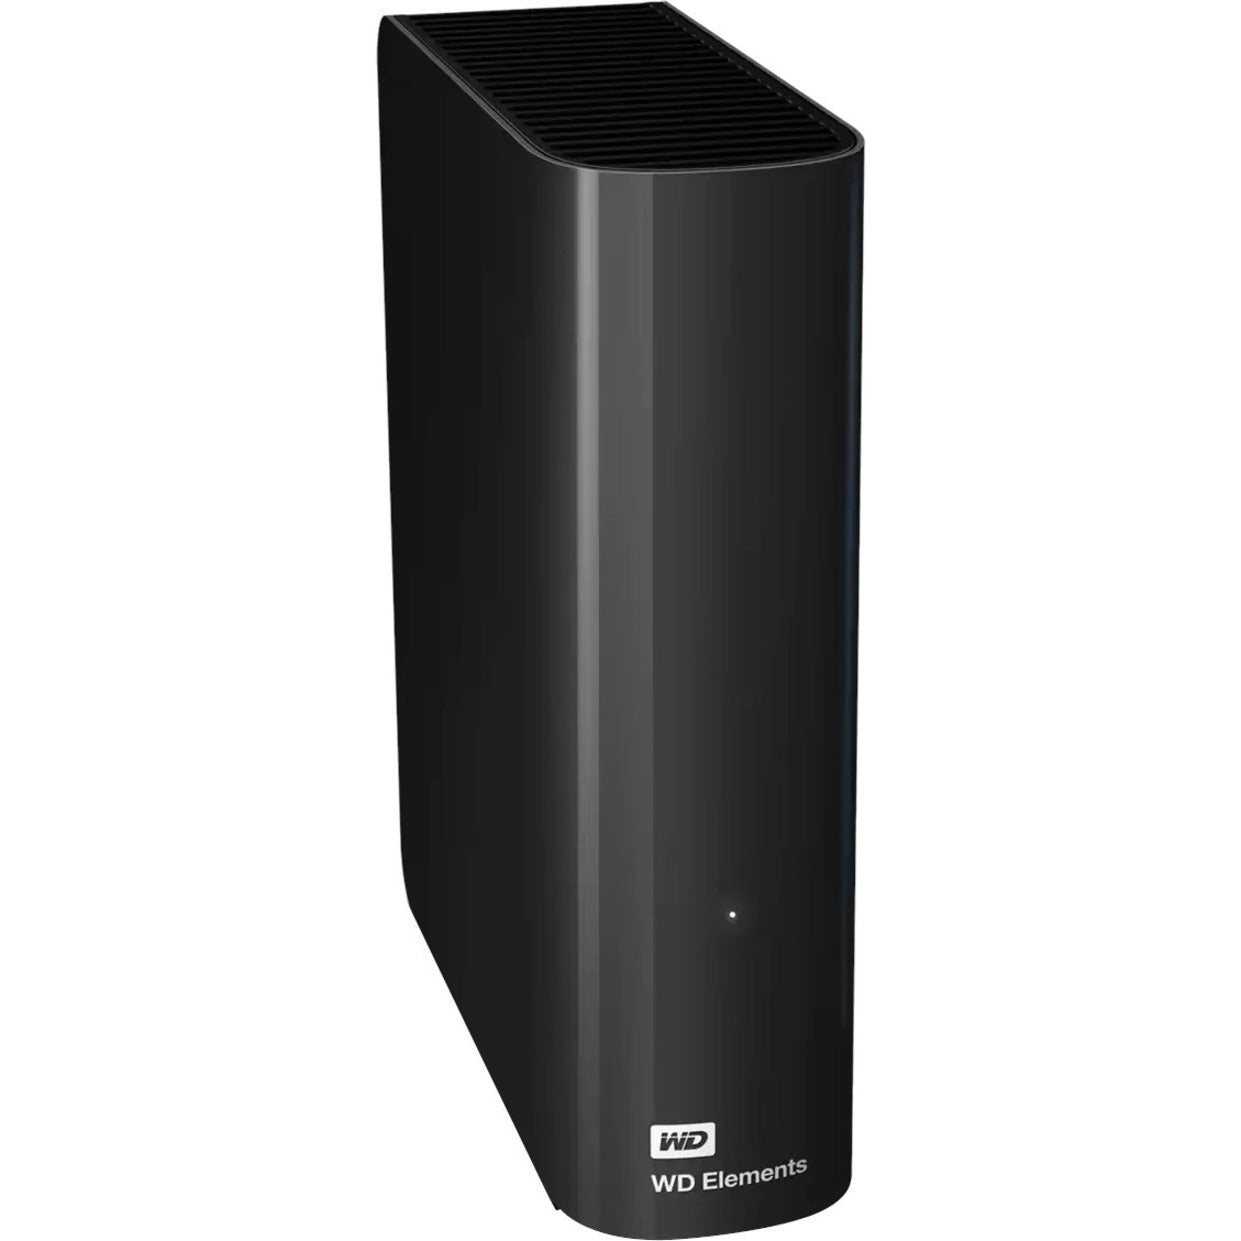 WD Elements WDBWLG0160HBK-NESN 16 TB Desktop Hard Drive - External